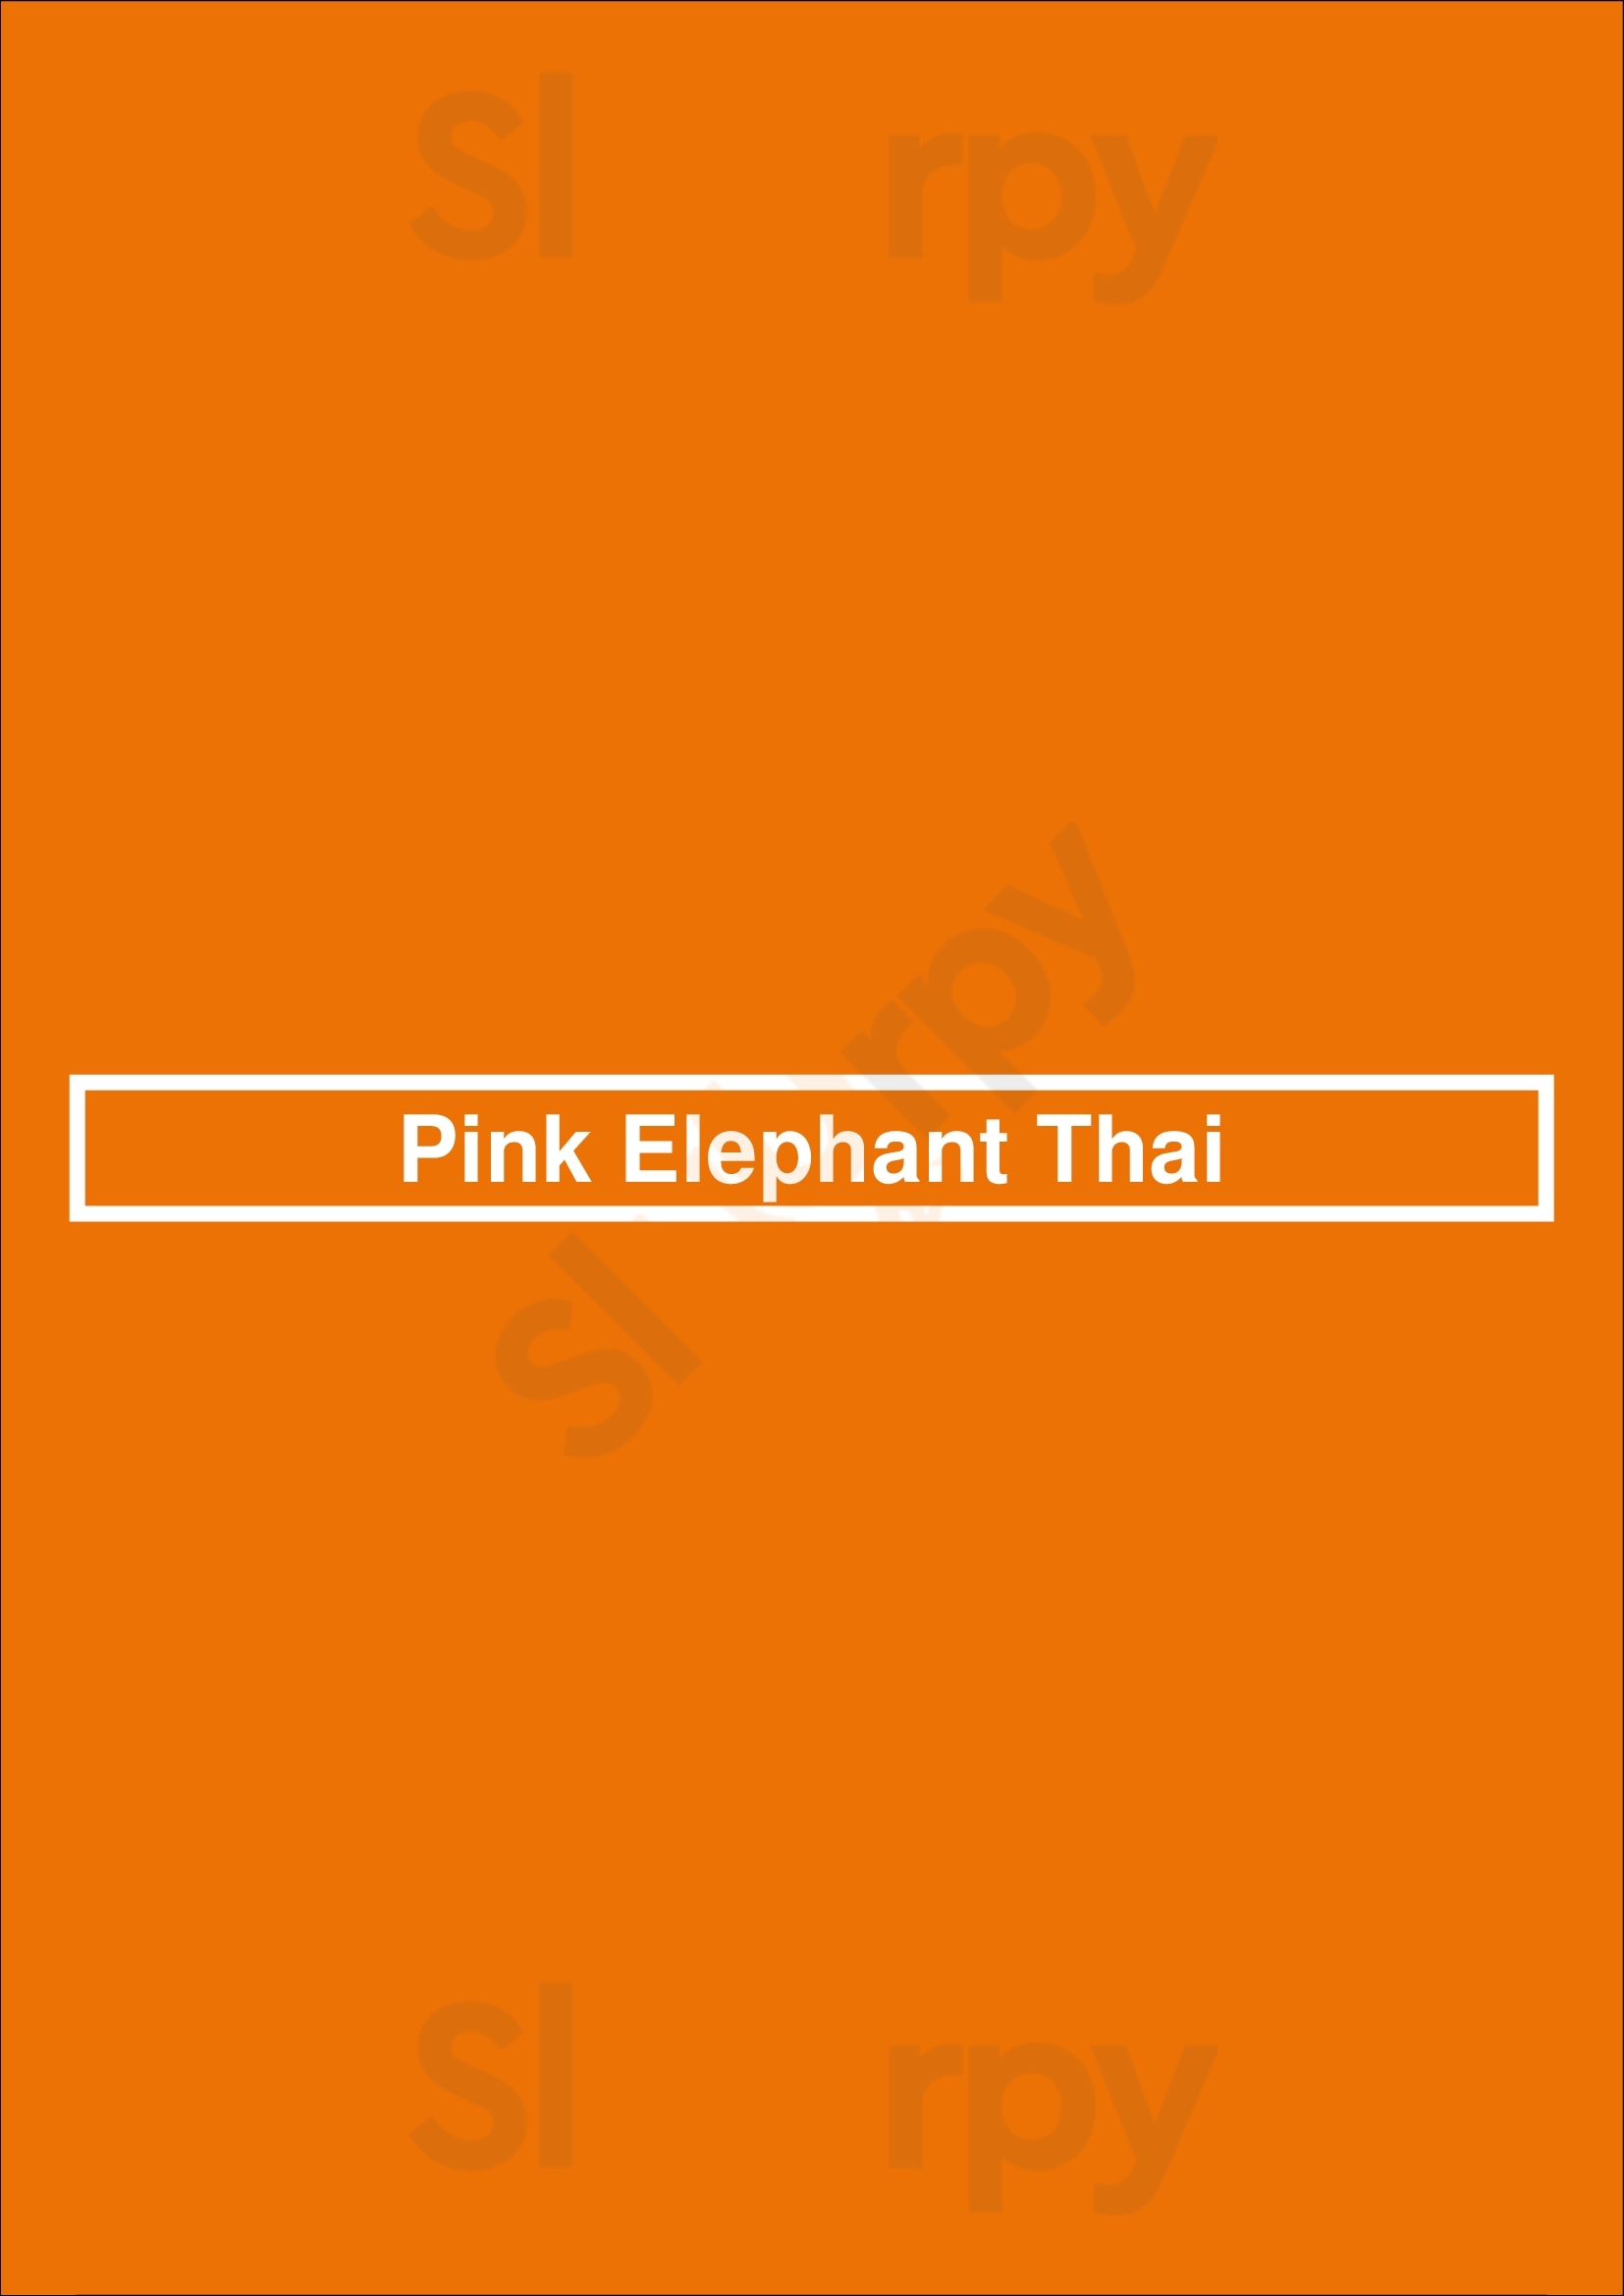 Pink Elephant Thai Vancouver Menu - 1